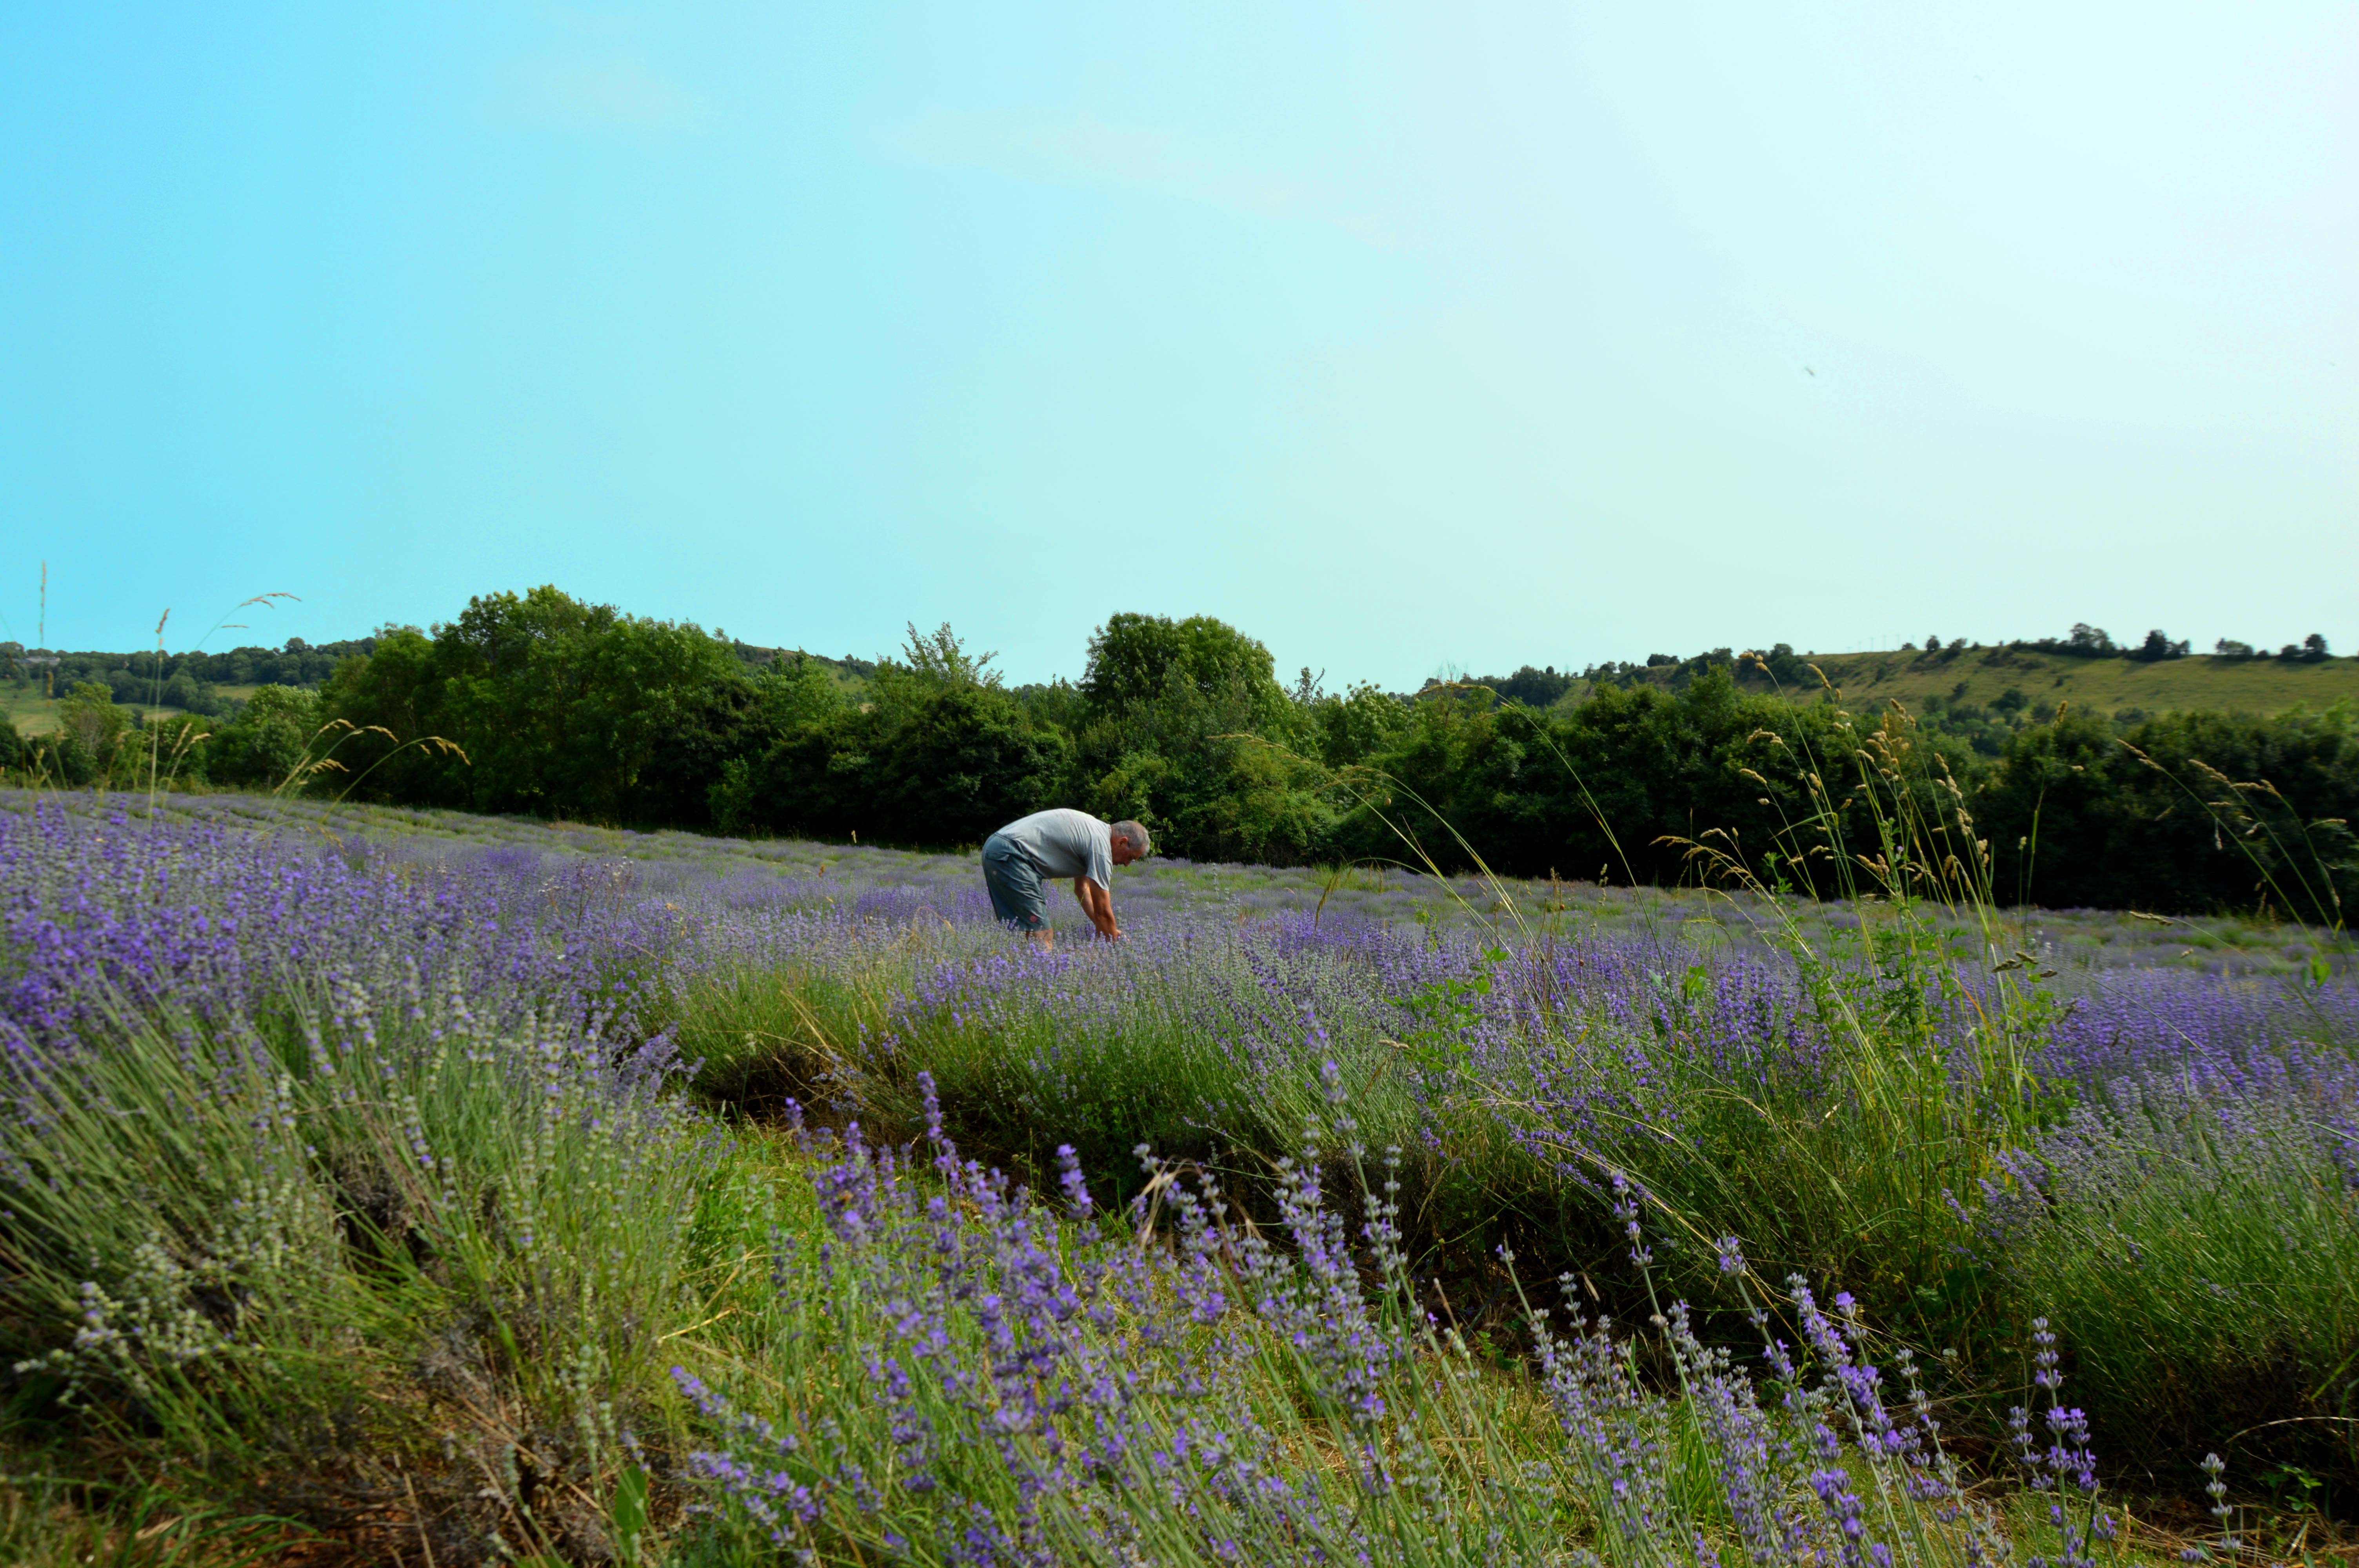 Lavender grower working in his field